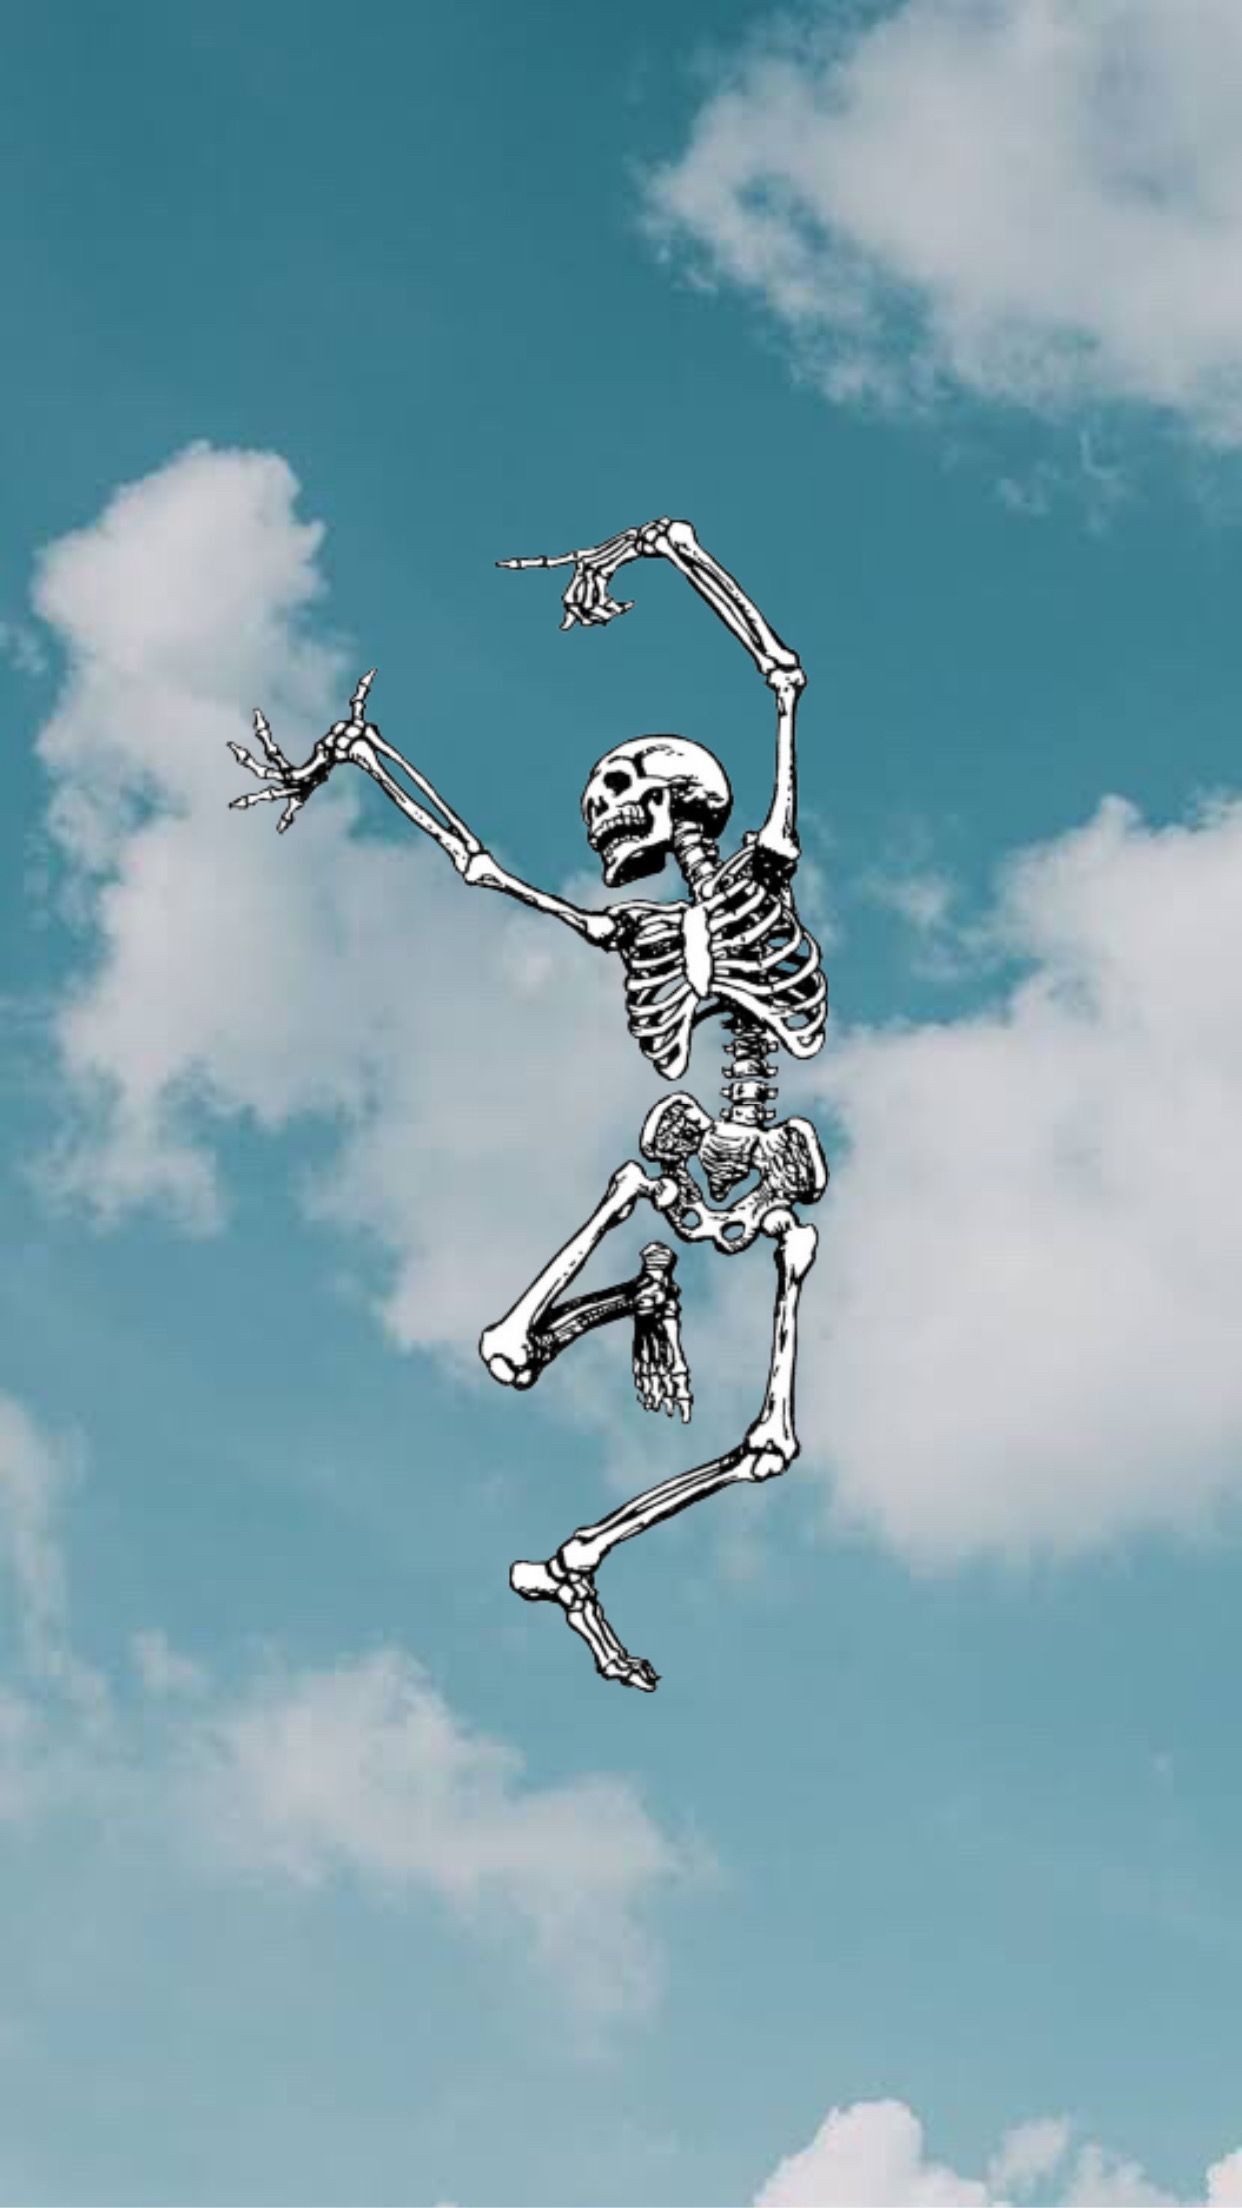 Dancing Skeleton wallpaper background. Art wallpaper iphone, Witchy wallpaper, iPhone background wallpaper